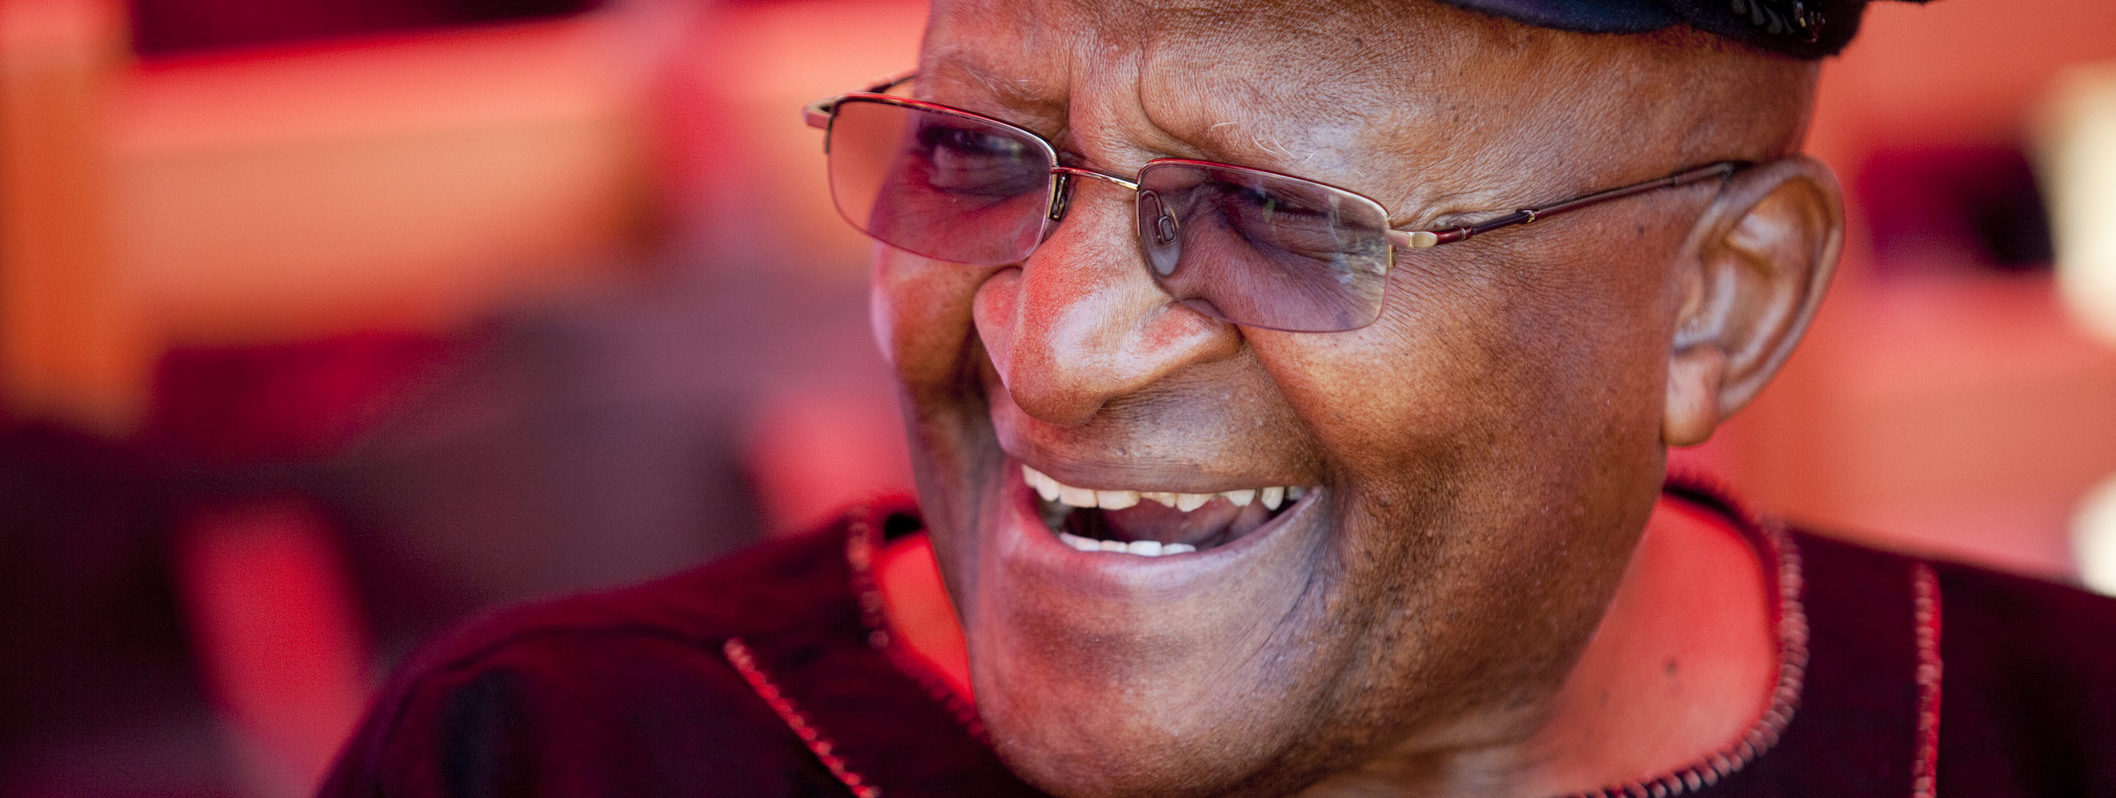 Desmond Tutu as Christian Mystic